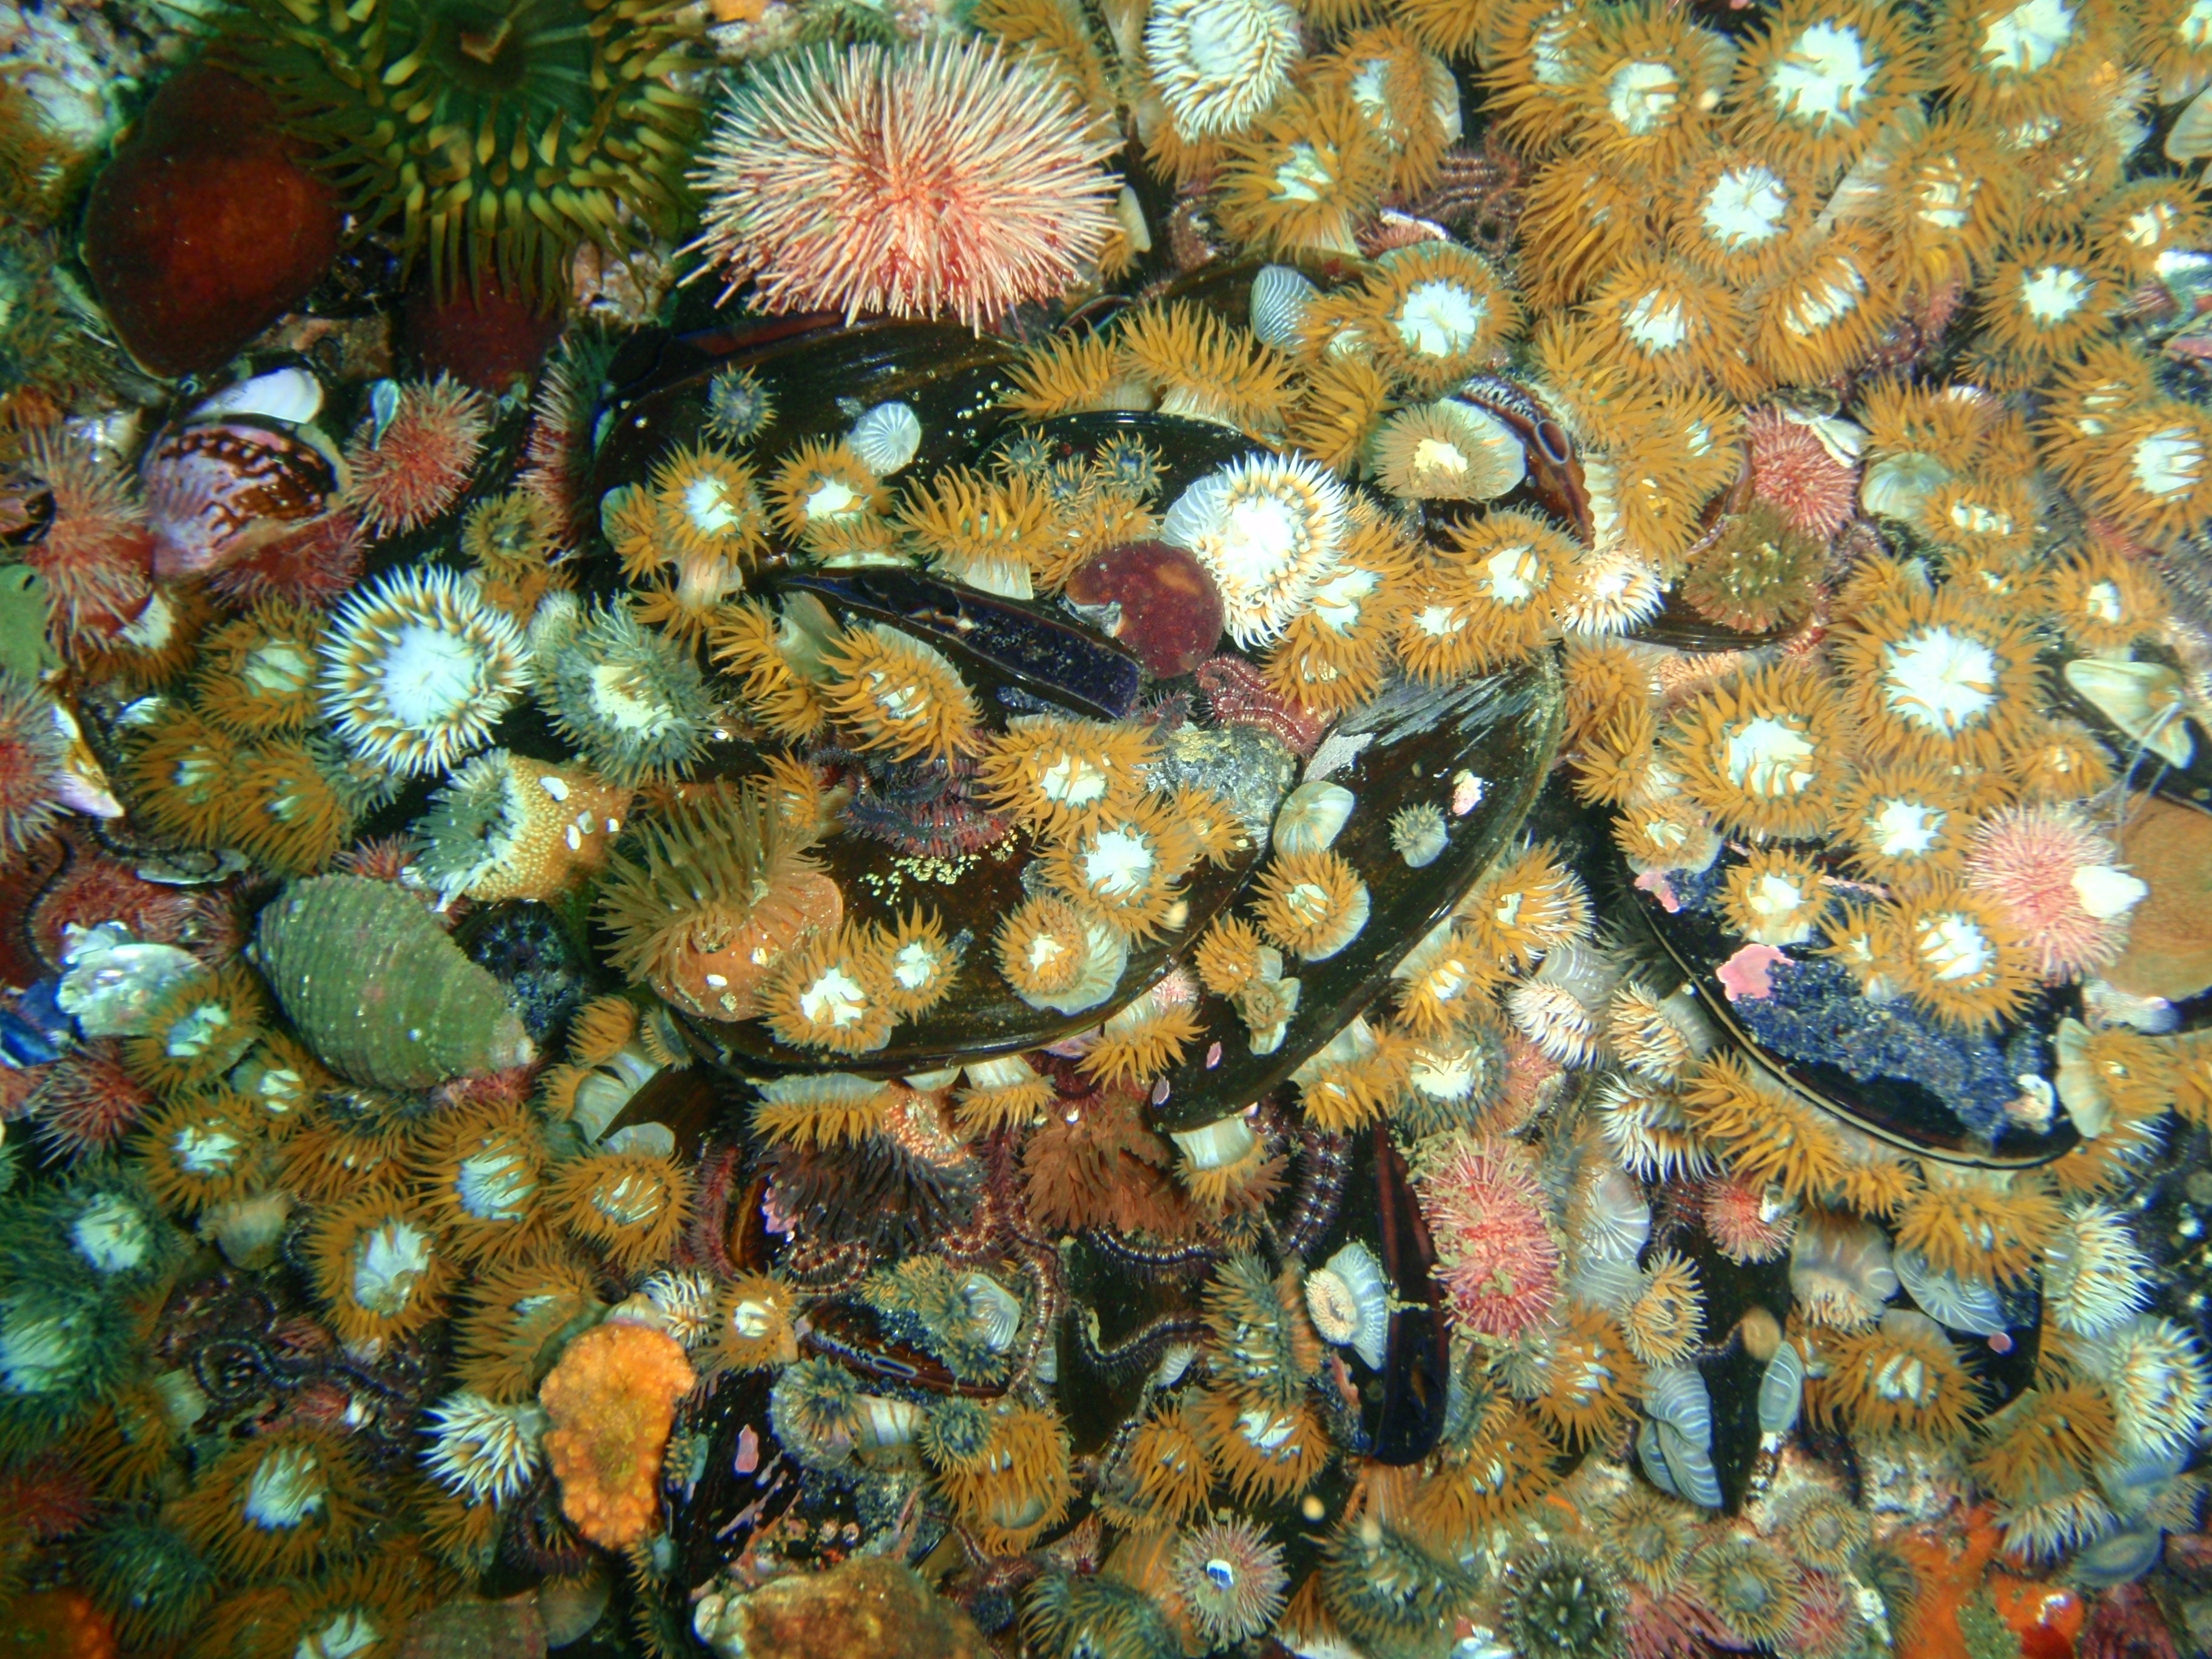 Anemones at Stonhenge Reef P4137402